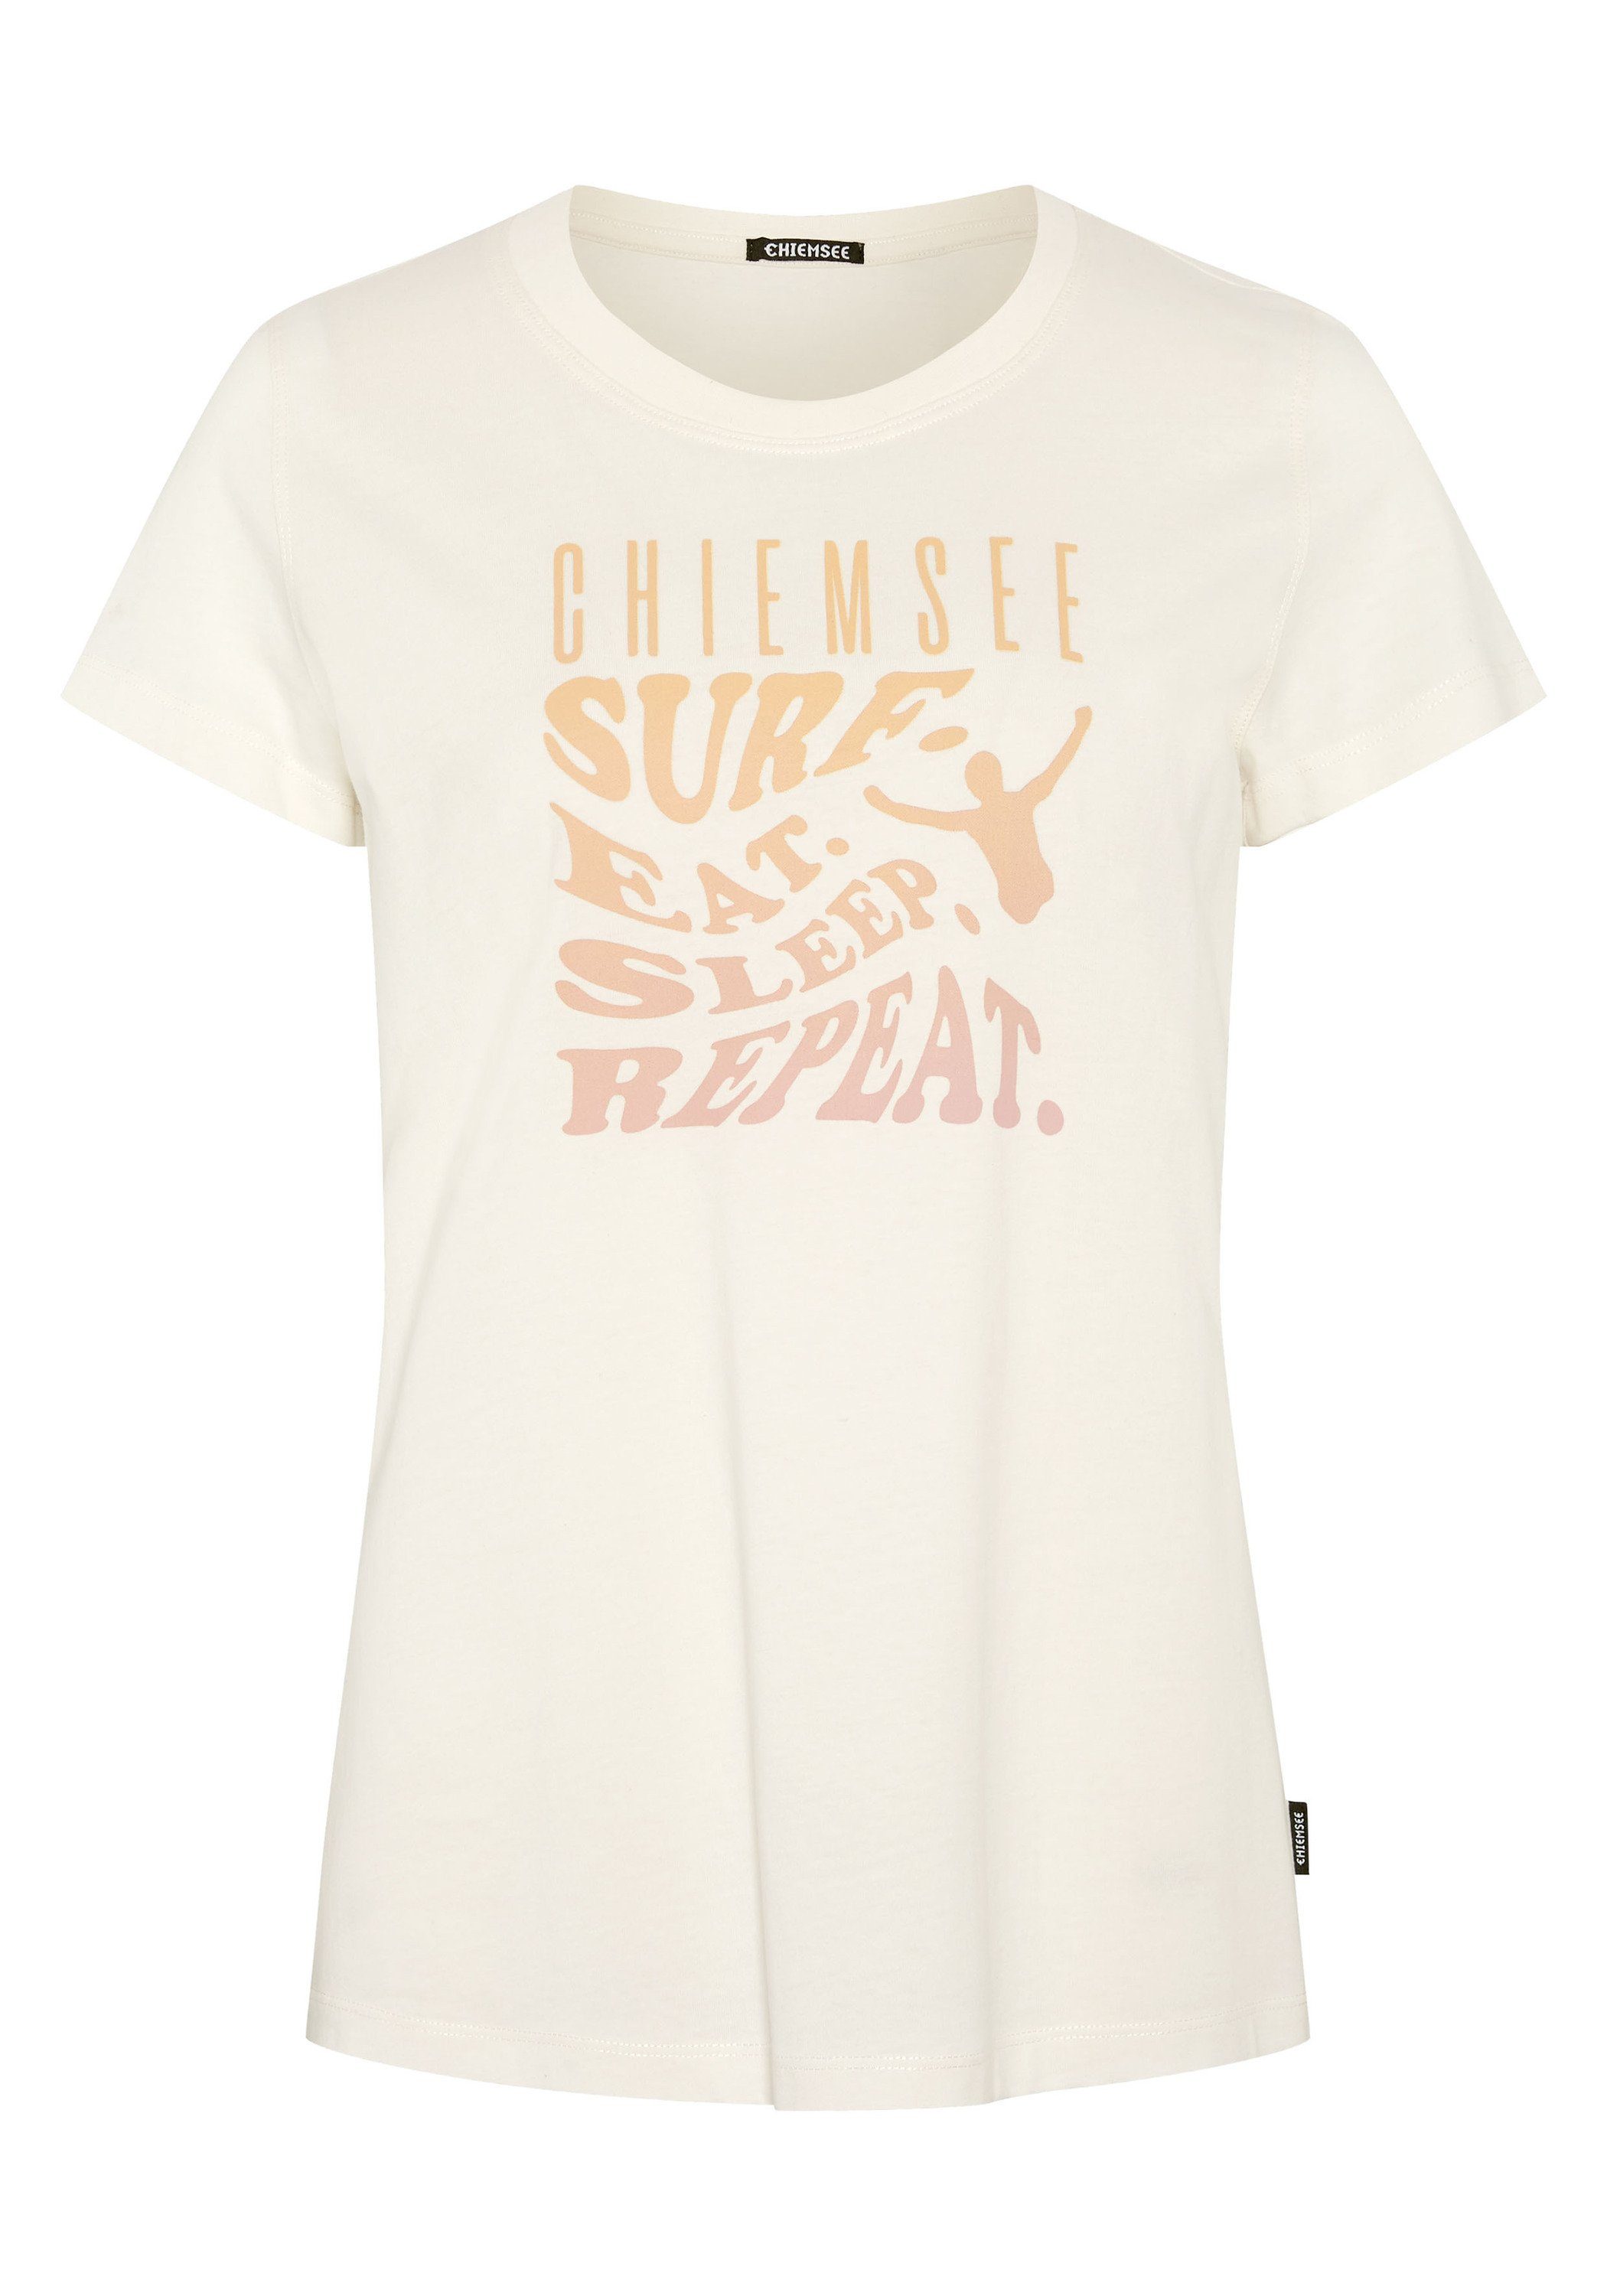 White Schriftzug Star 11-4202 1 mit Chiemsee T-Shirt Print-Shirt